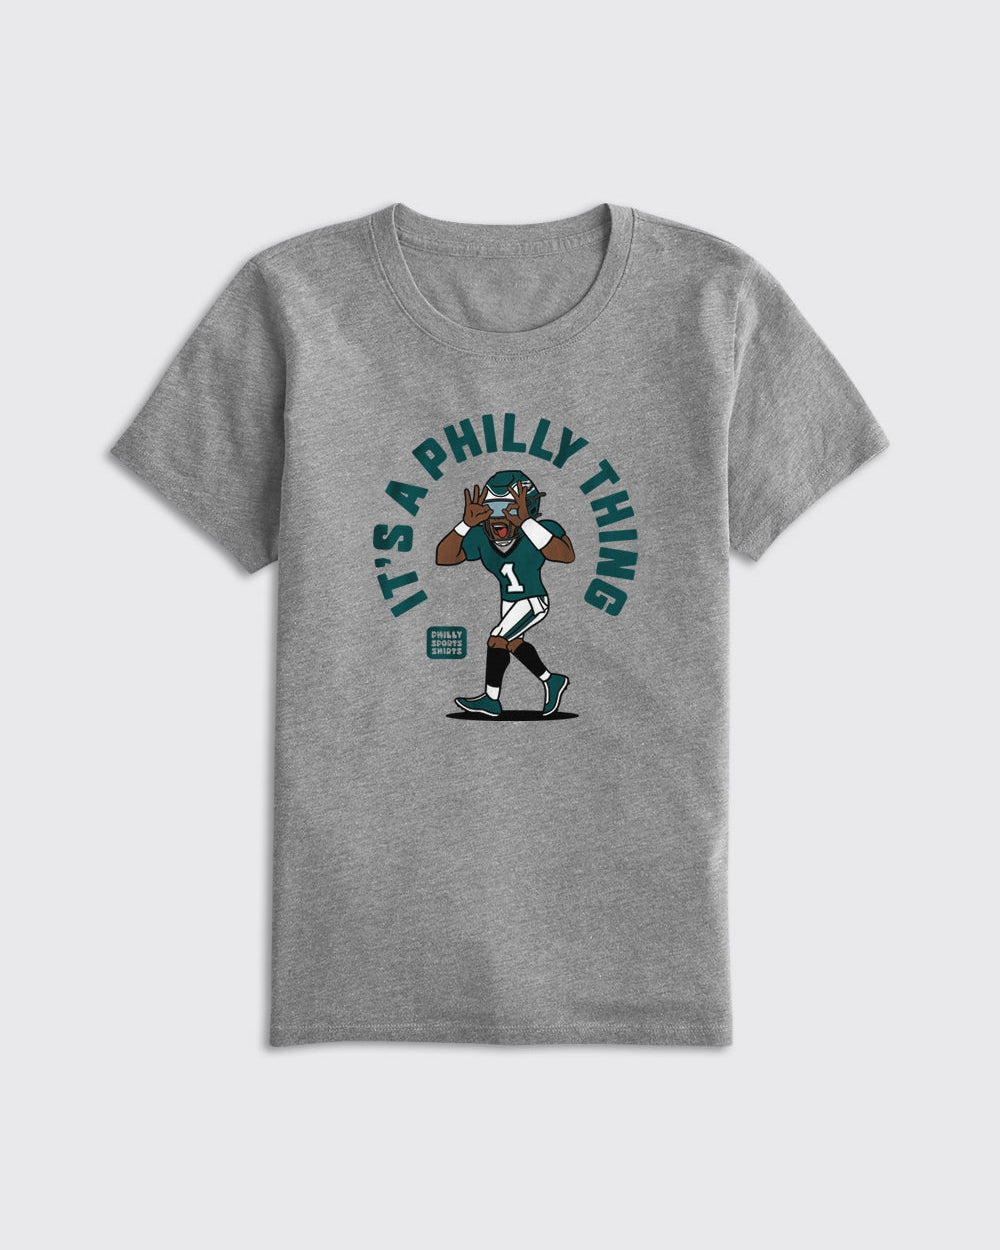 I Love Sports' Graphic Printed Kids T-shirt